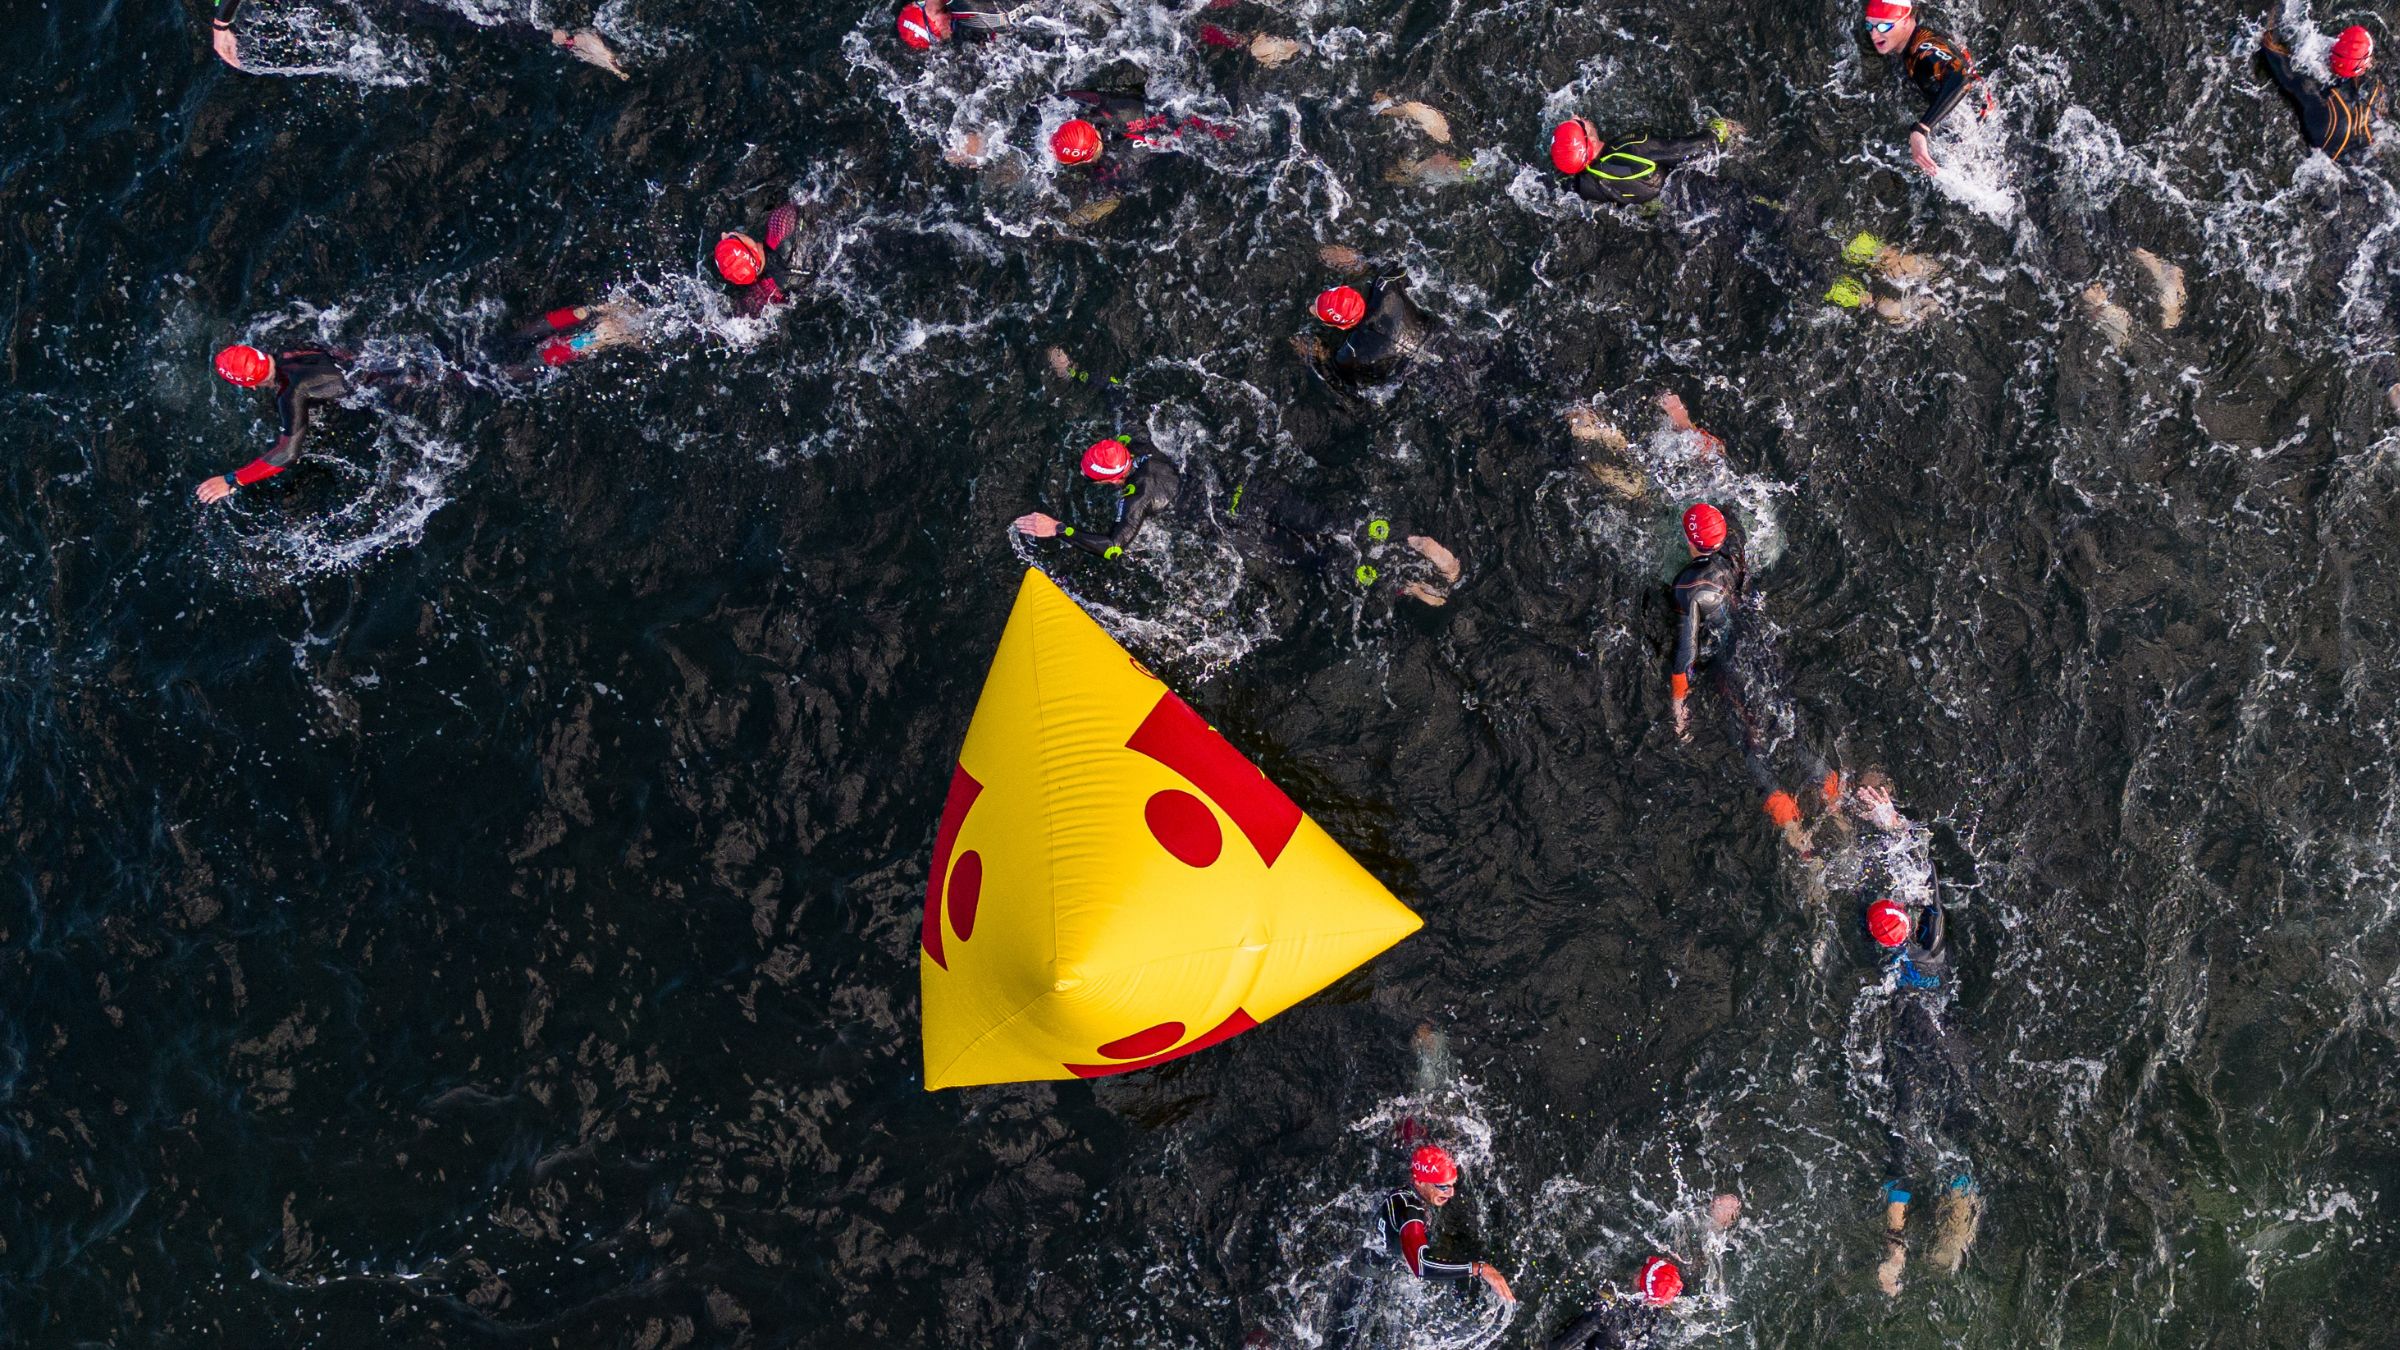 Triathlon: How To Keep Sight Of Buoys